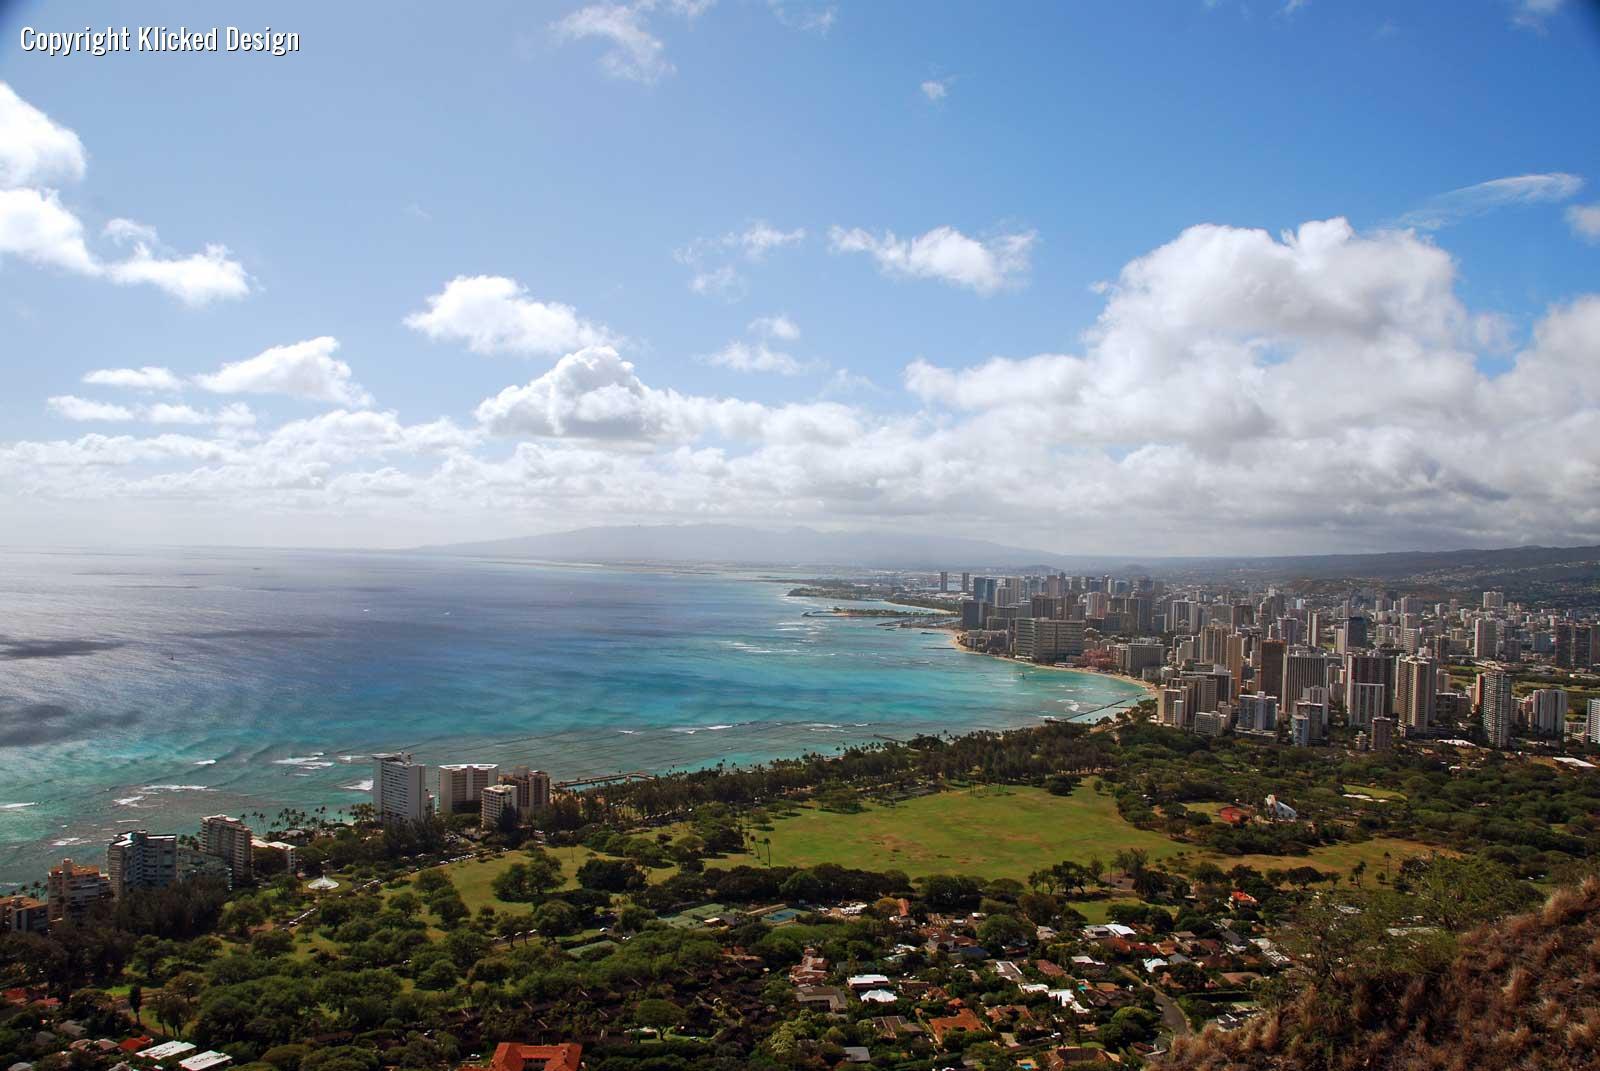 Honolulu from Diamond Head. Hawaii Picture of